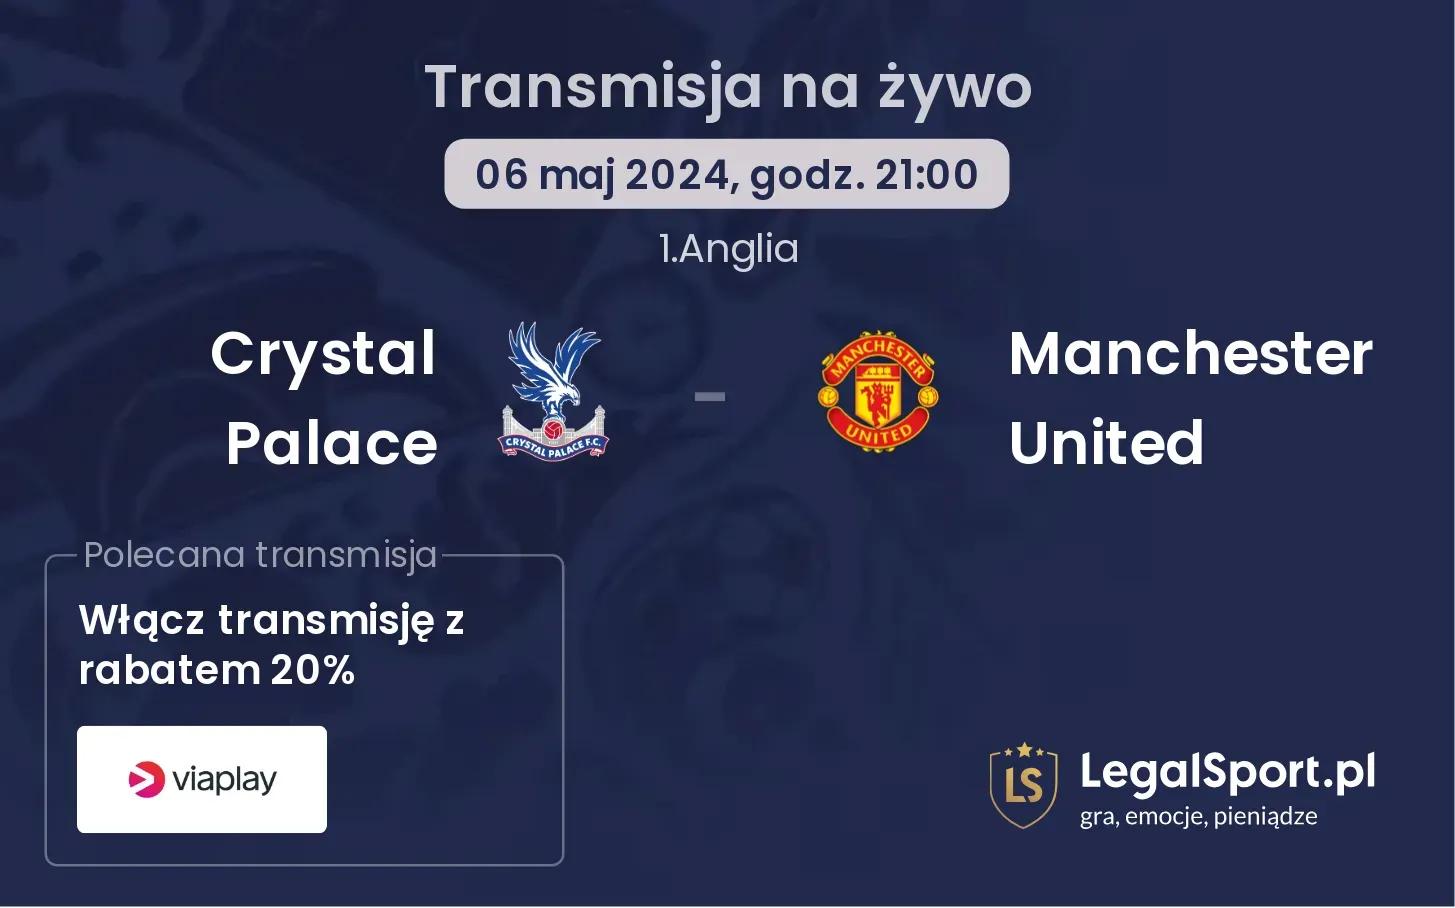 Crystal Palace - Manchester United transmisja na żywo